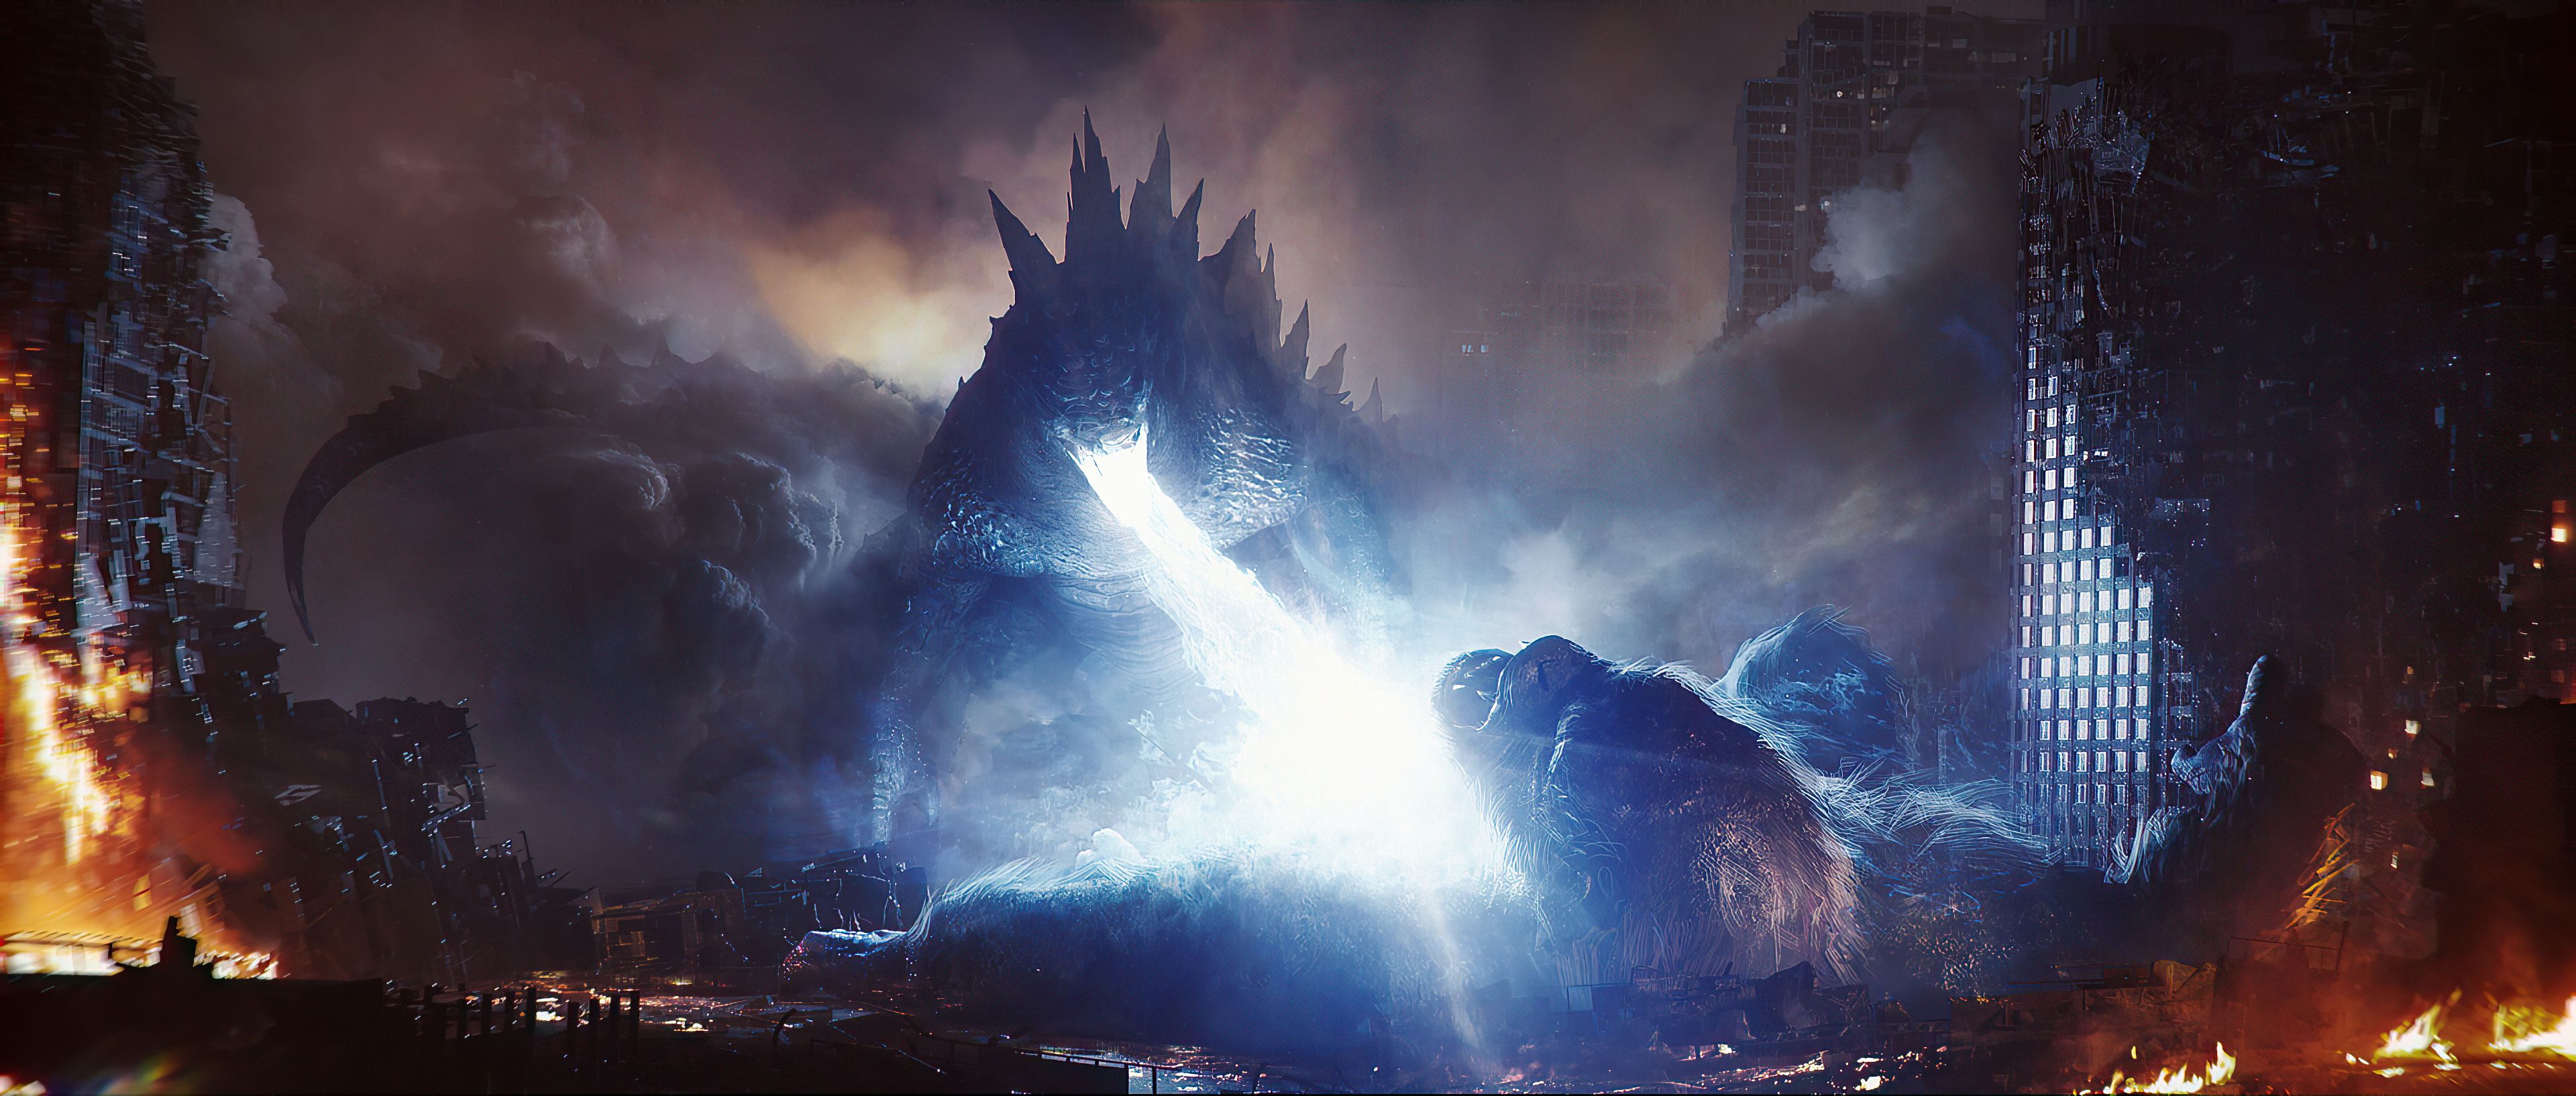 Godzilla Vs Kong, HD Movies, 4k Wallpaper, Image, Background, Photo and Picture